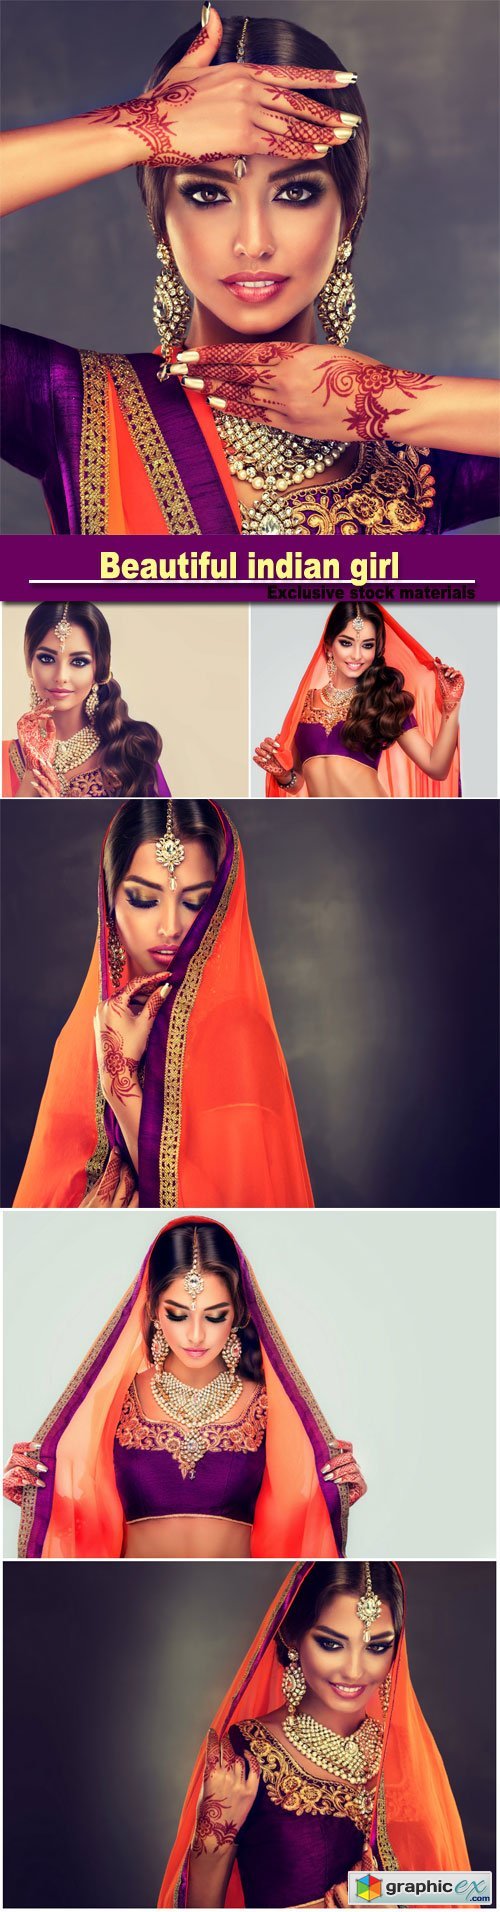 Portrait of beautiful indian girl, young hindu woman model with tatoo mehndi and kundan jewelry, traditional Indian costume lehenga choli